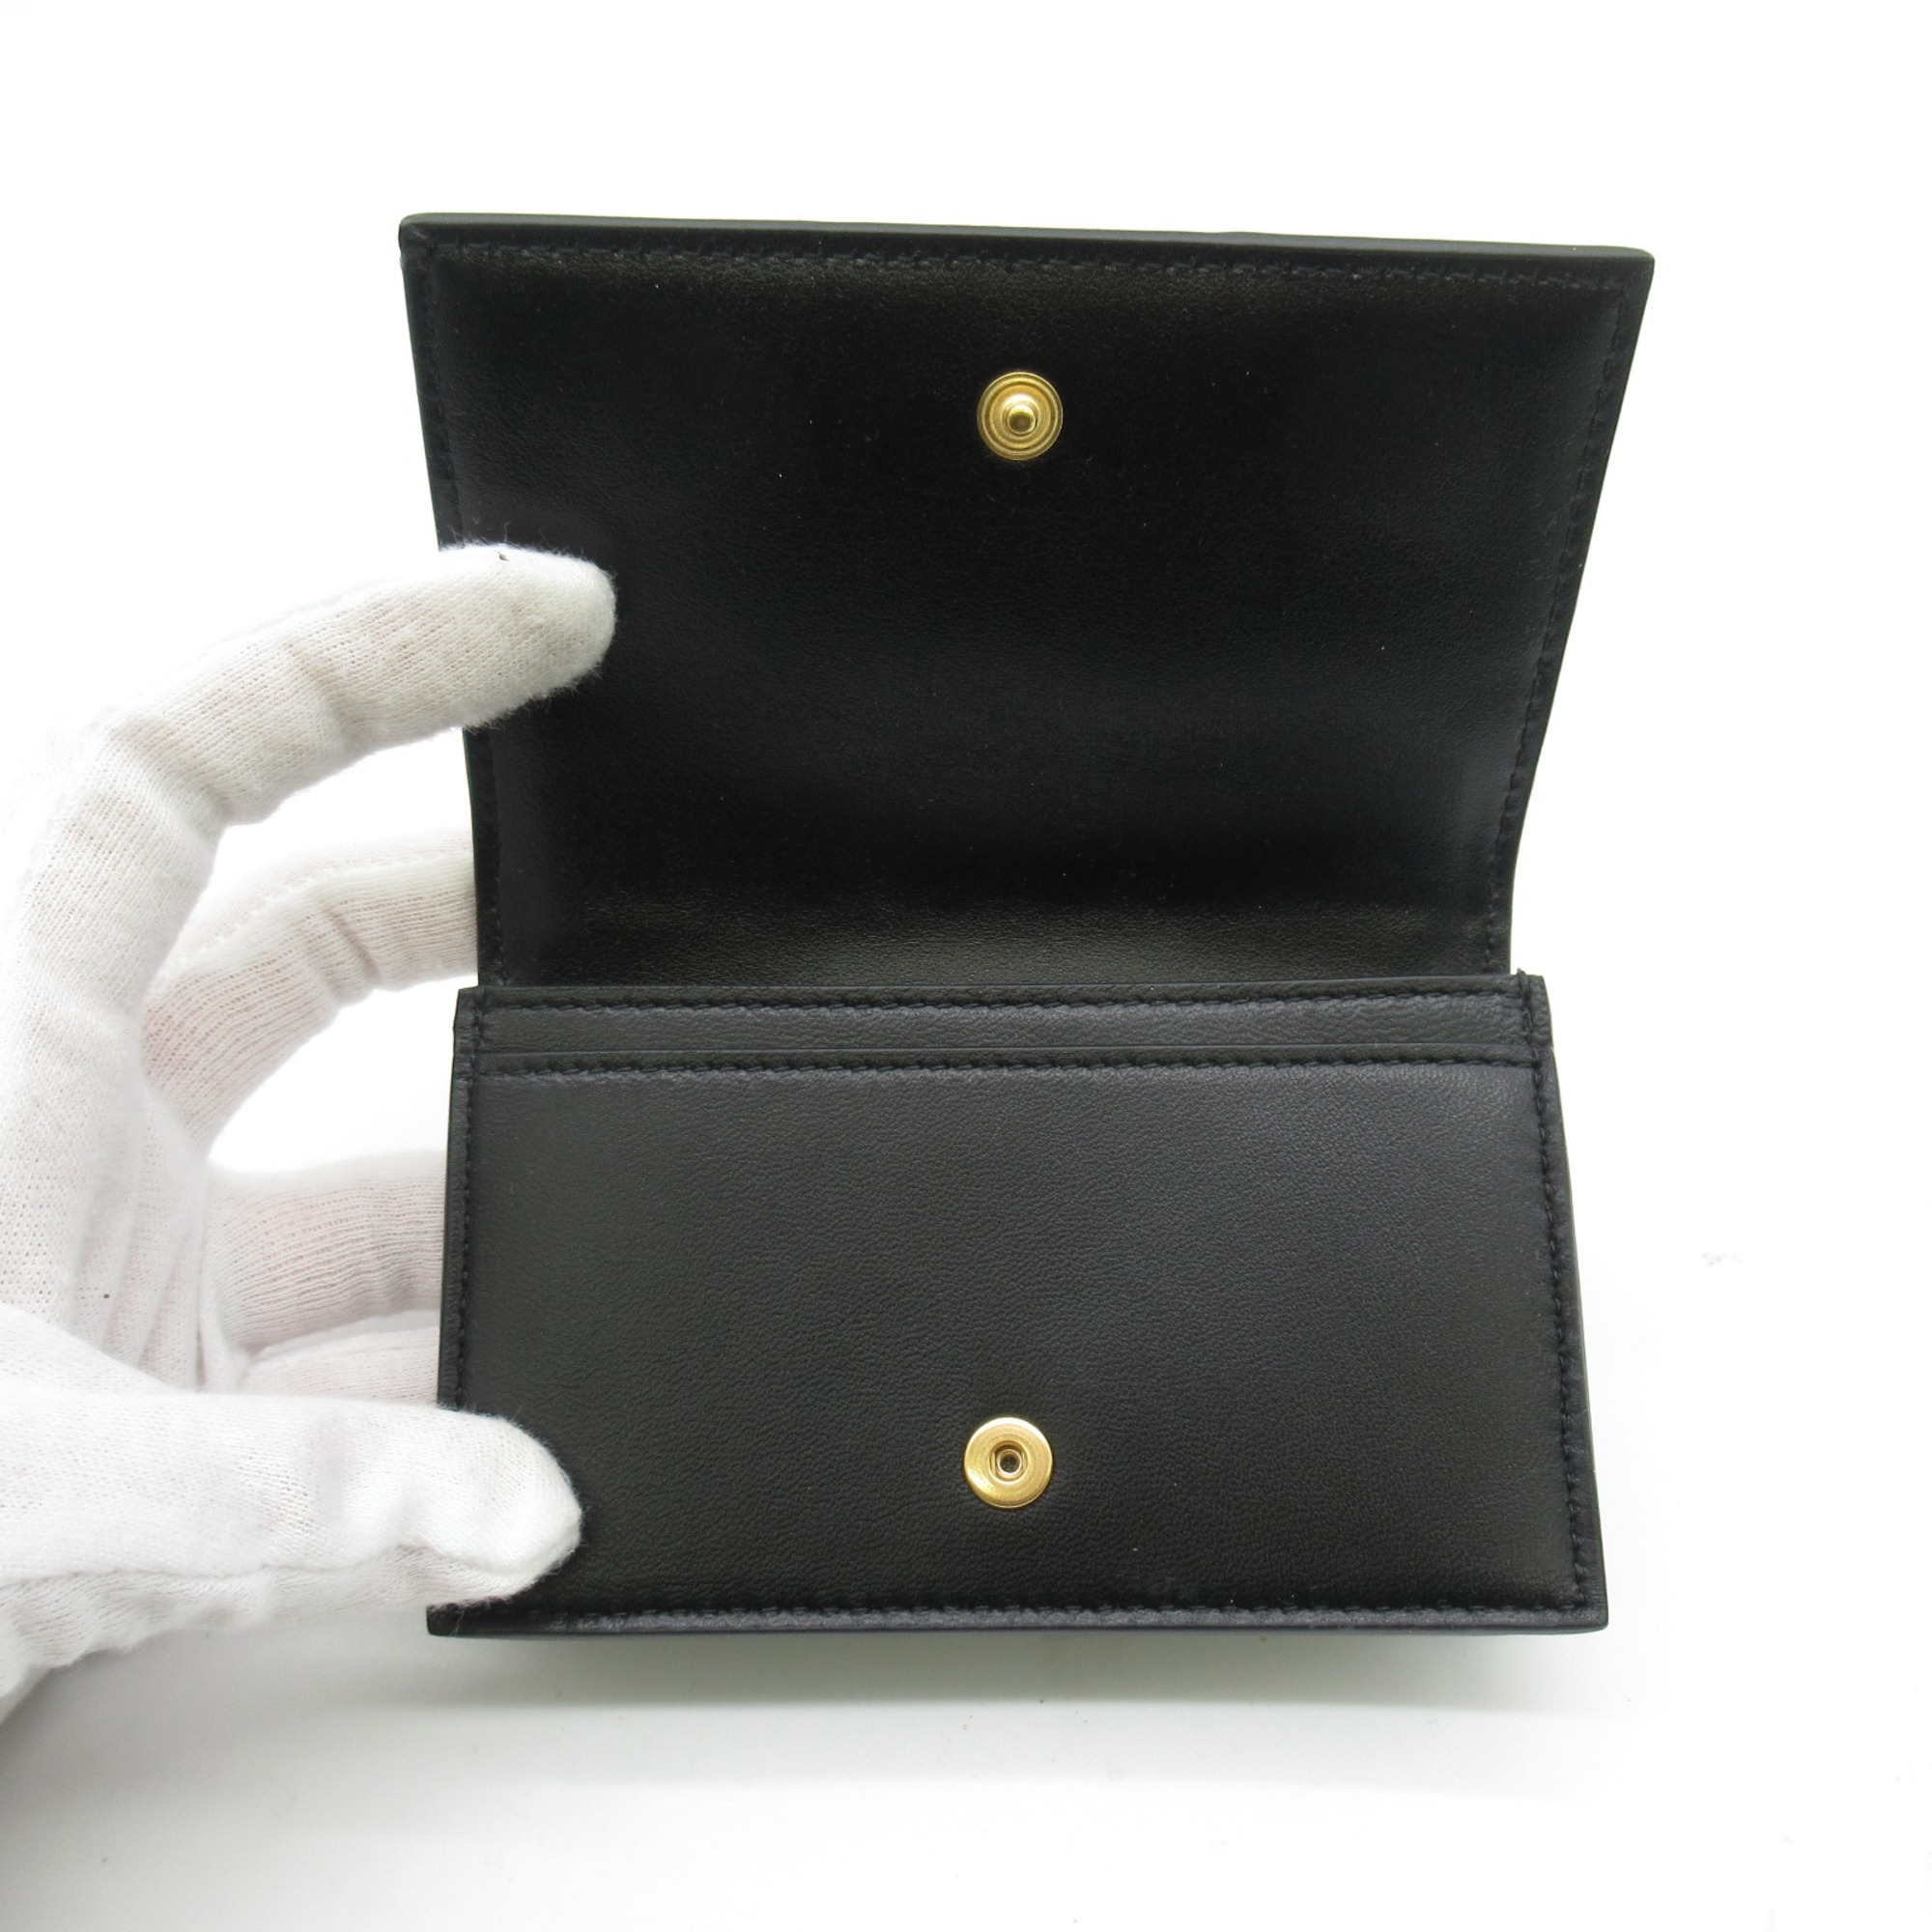 BOTTEGA VENETA Card Case Black leather 651396VCQC48425